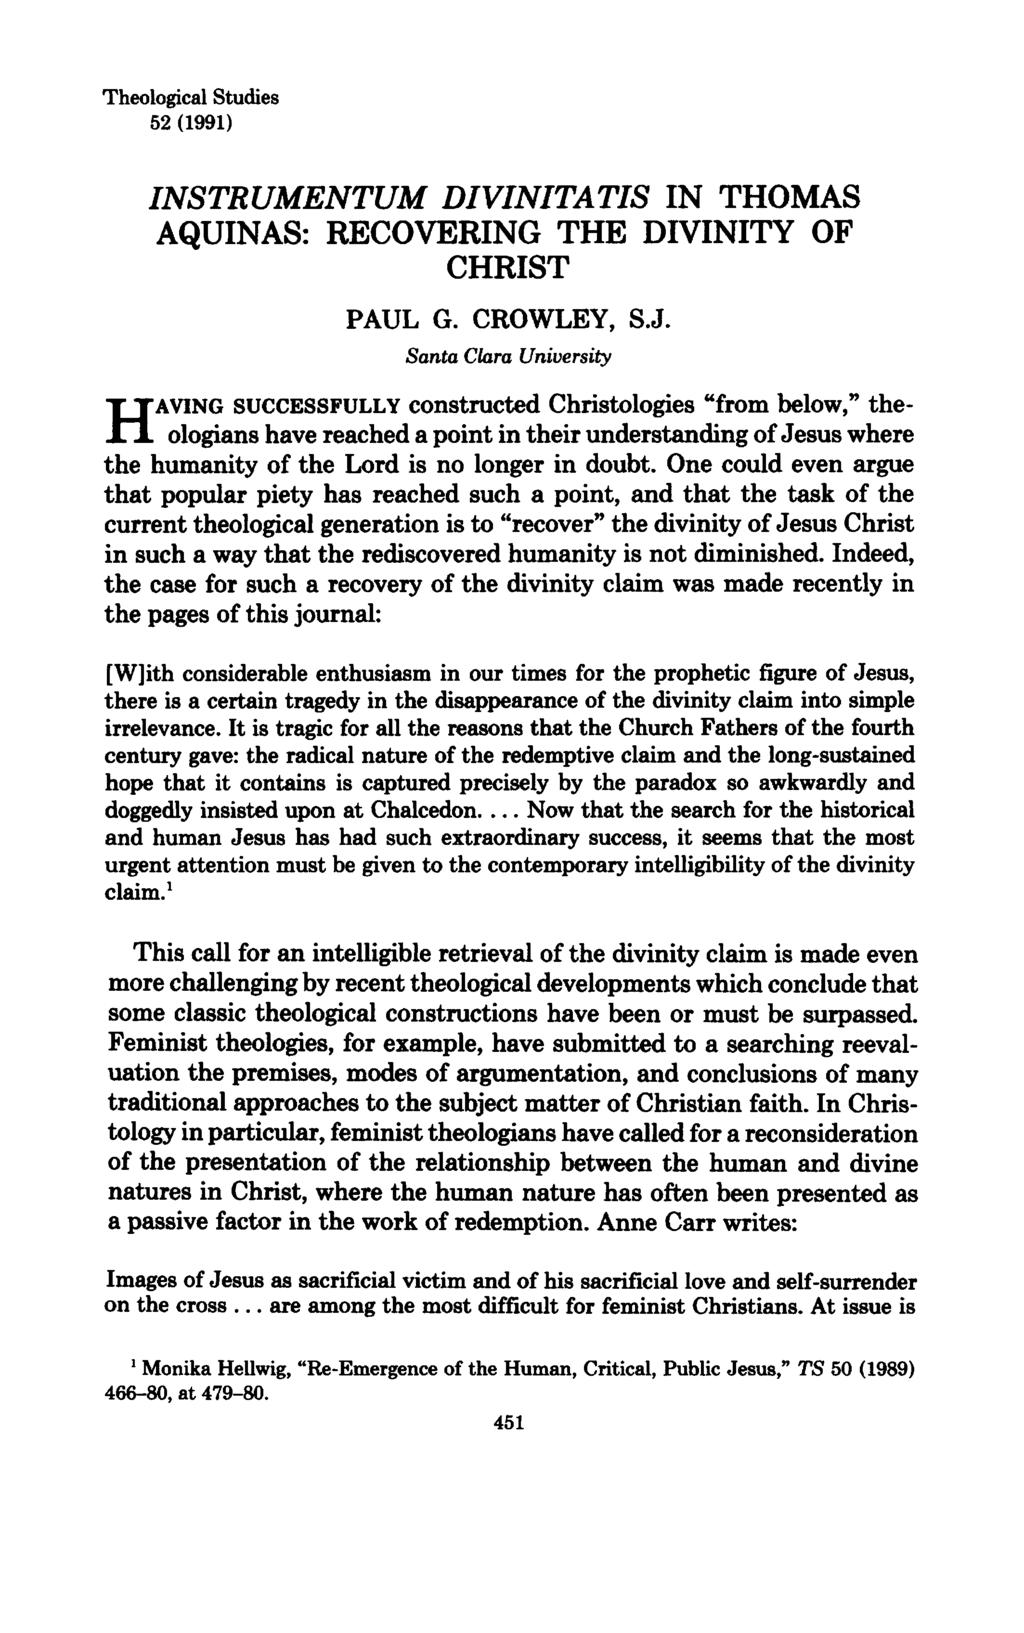 Theological Studies 52 (1991) INSTRUMENTUM DIVINITATIS IN THOMAS AQUINAS: RECOVERING THE DIVINITY OF CHRIST PAUL G. CROWLEY, S.J.